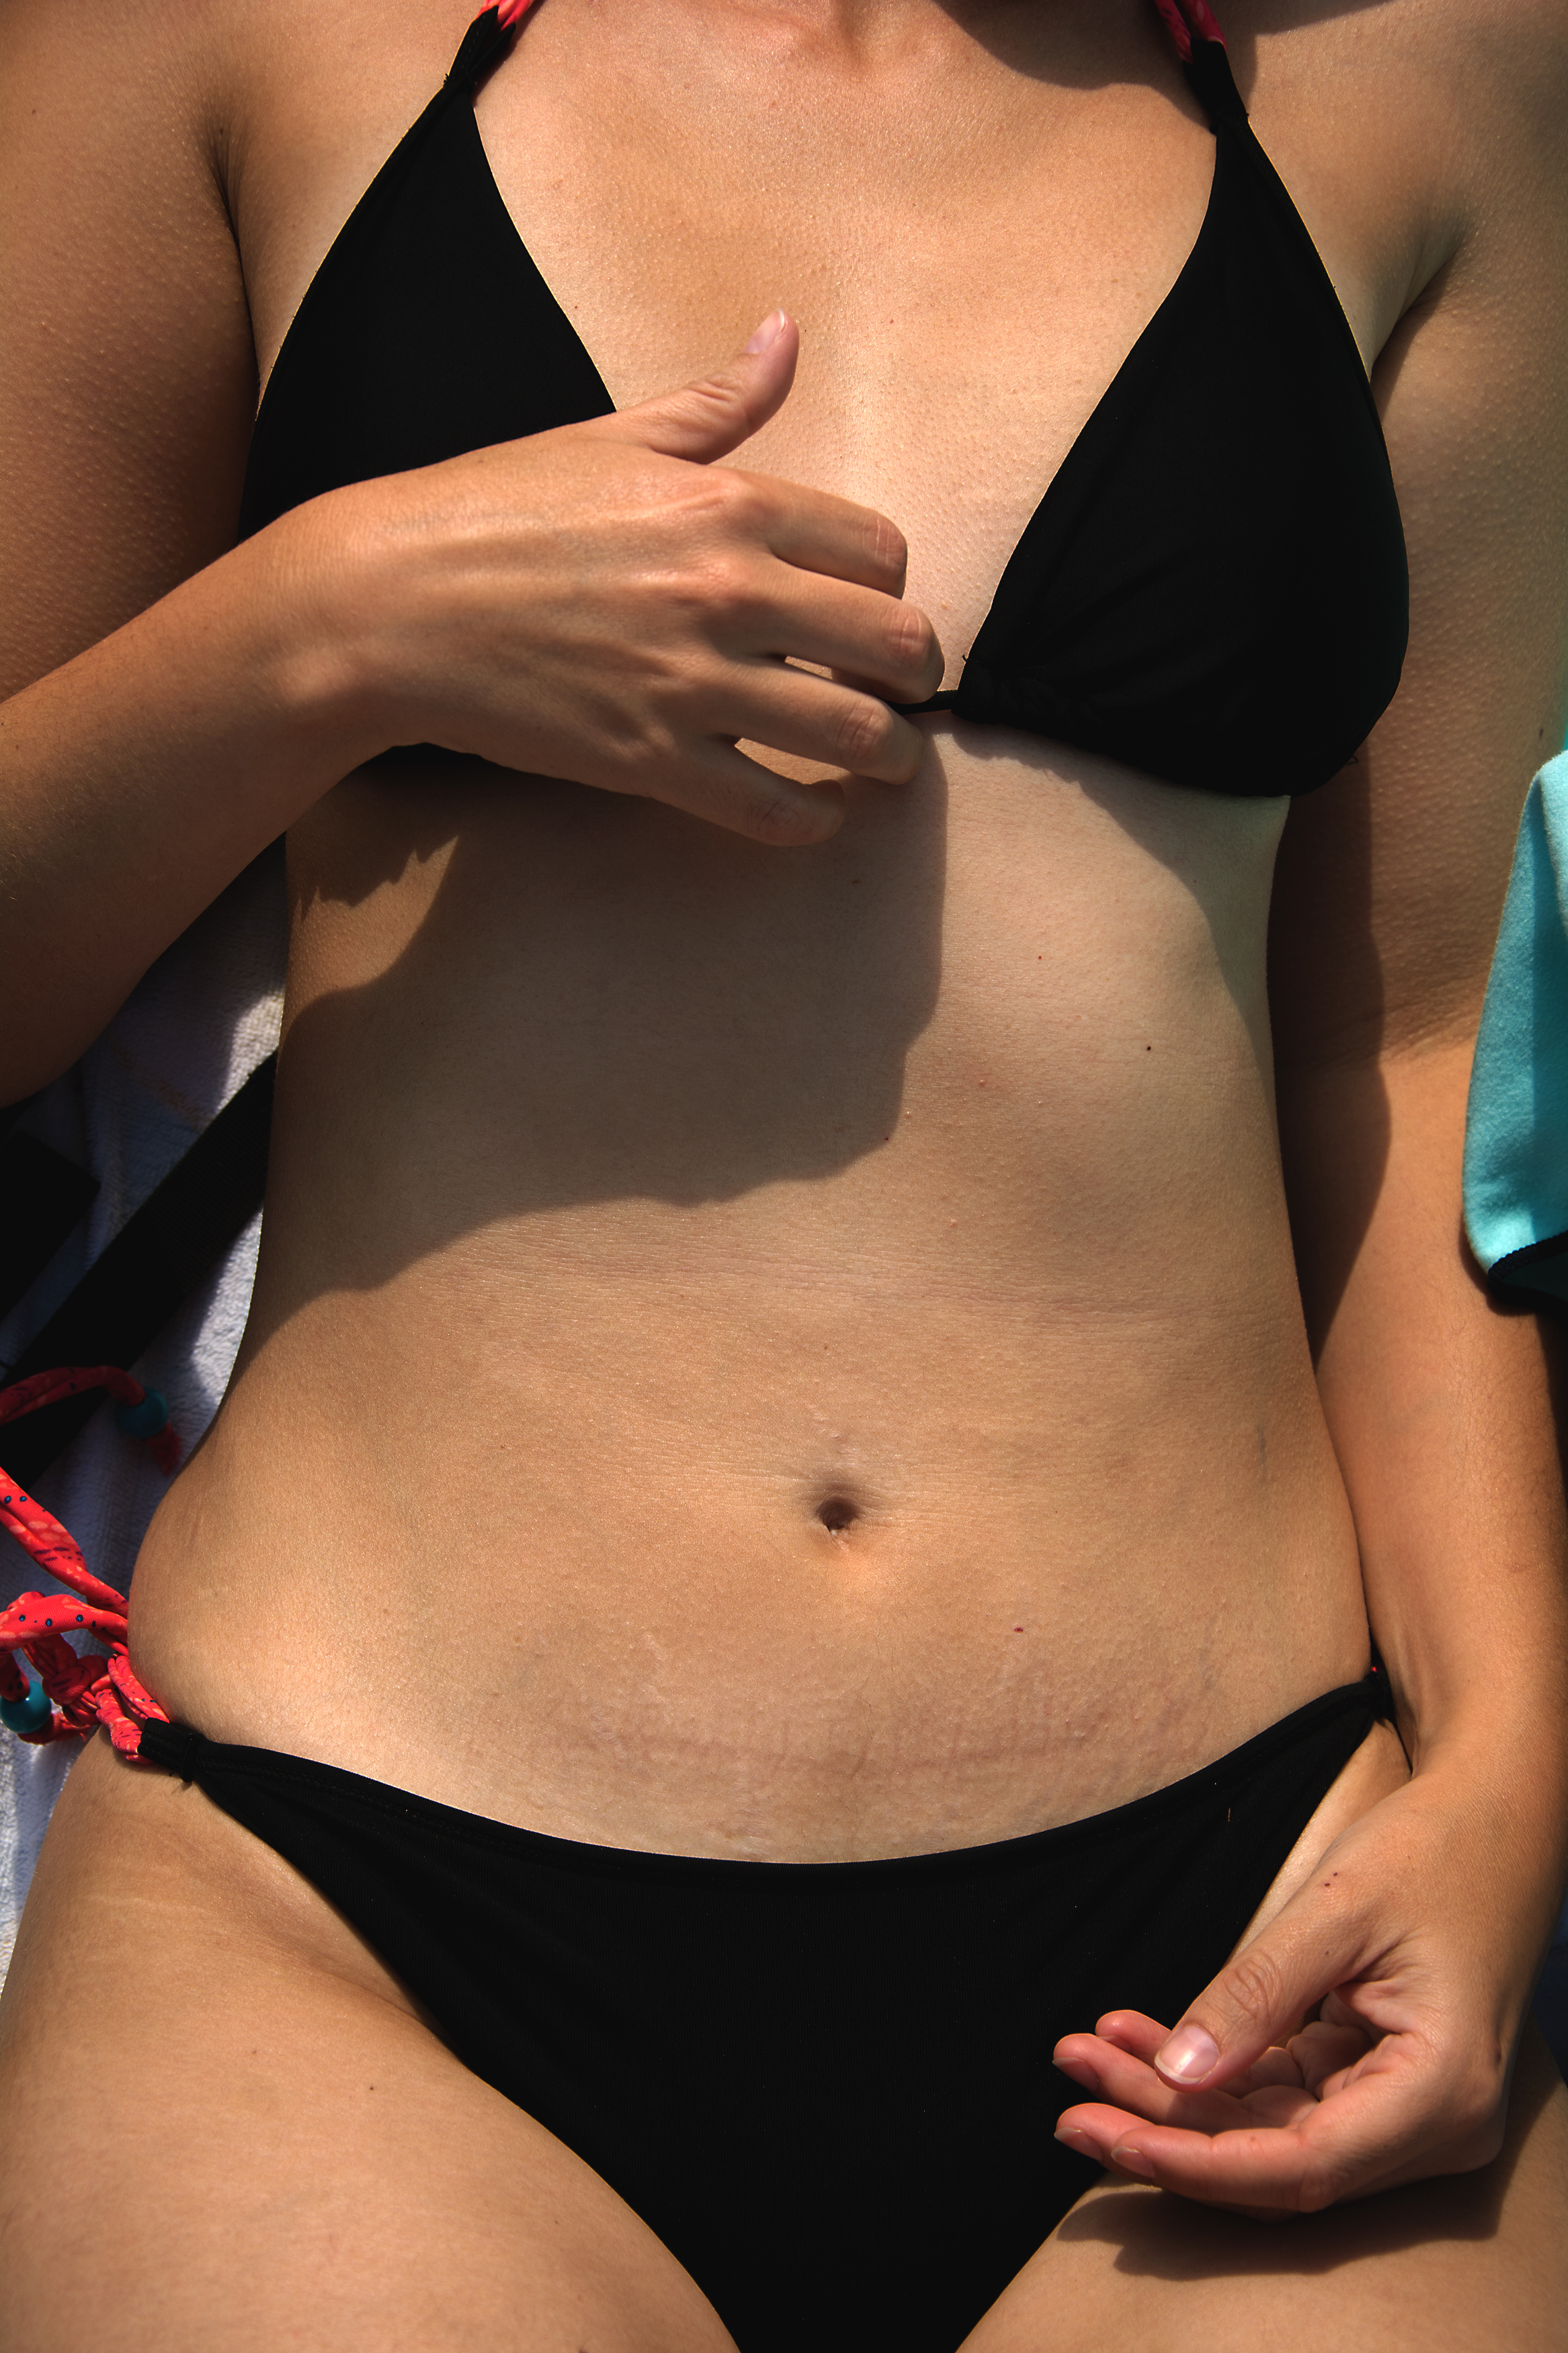 Free Image: Detail of woman body in black bikini | Libreshot Public ...